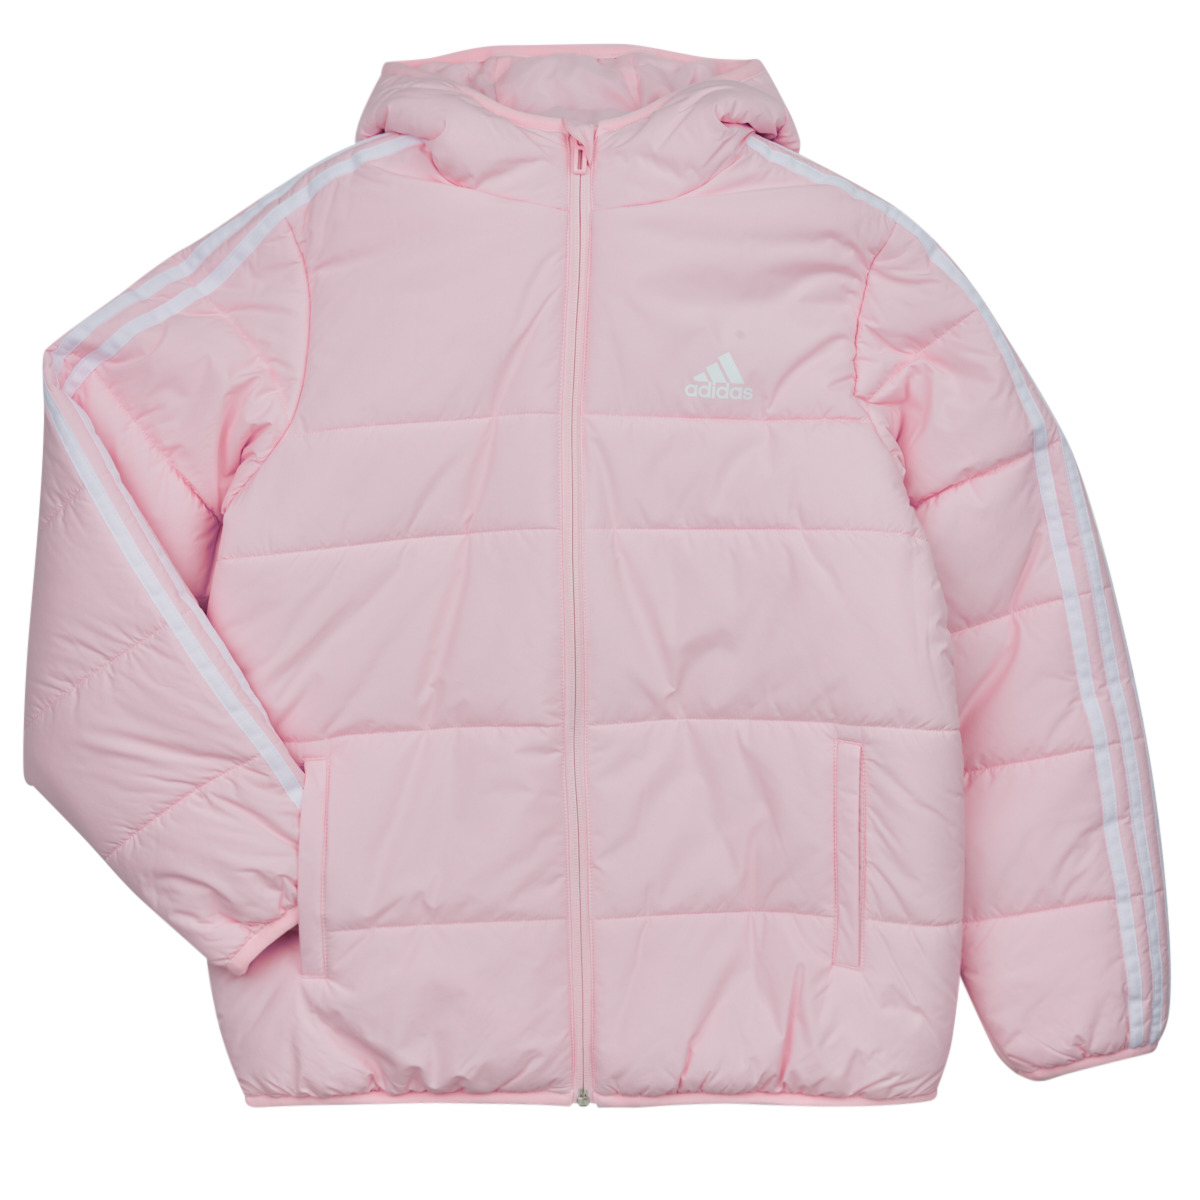 Adidas Sportswear JK delivery PAD Clothing - 3S Spartoo Pink NET | ! Child Free JKT - Duffel coats